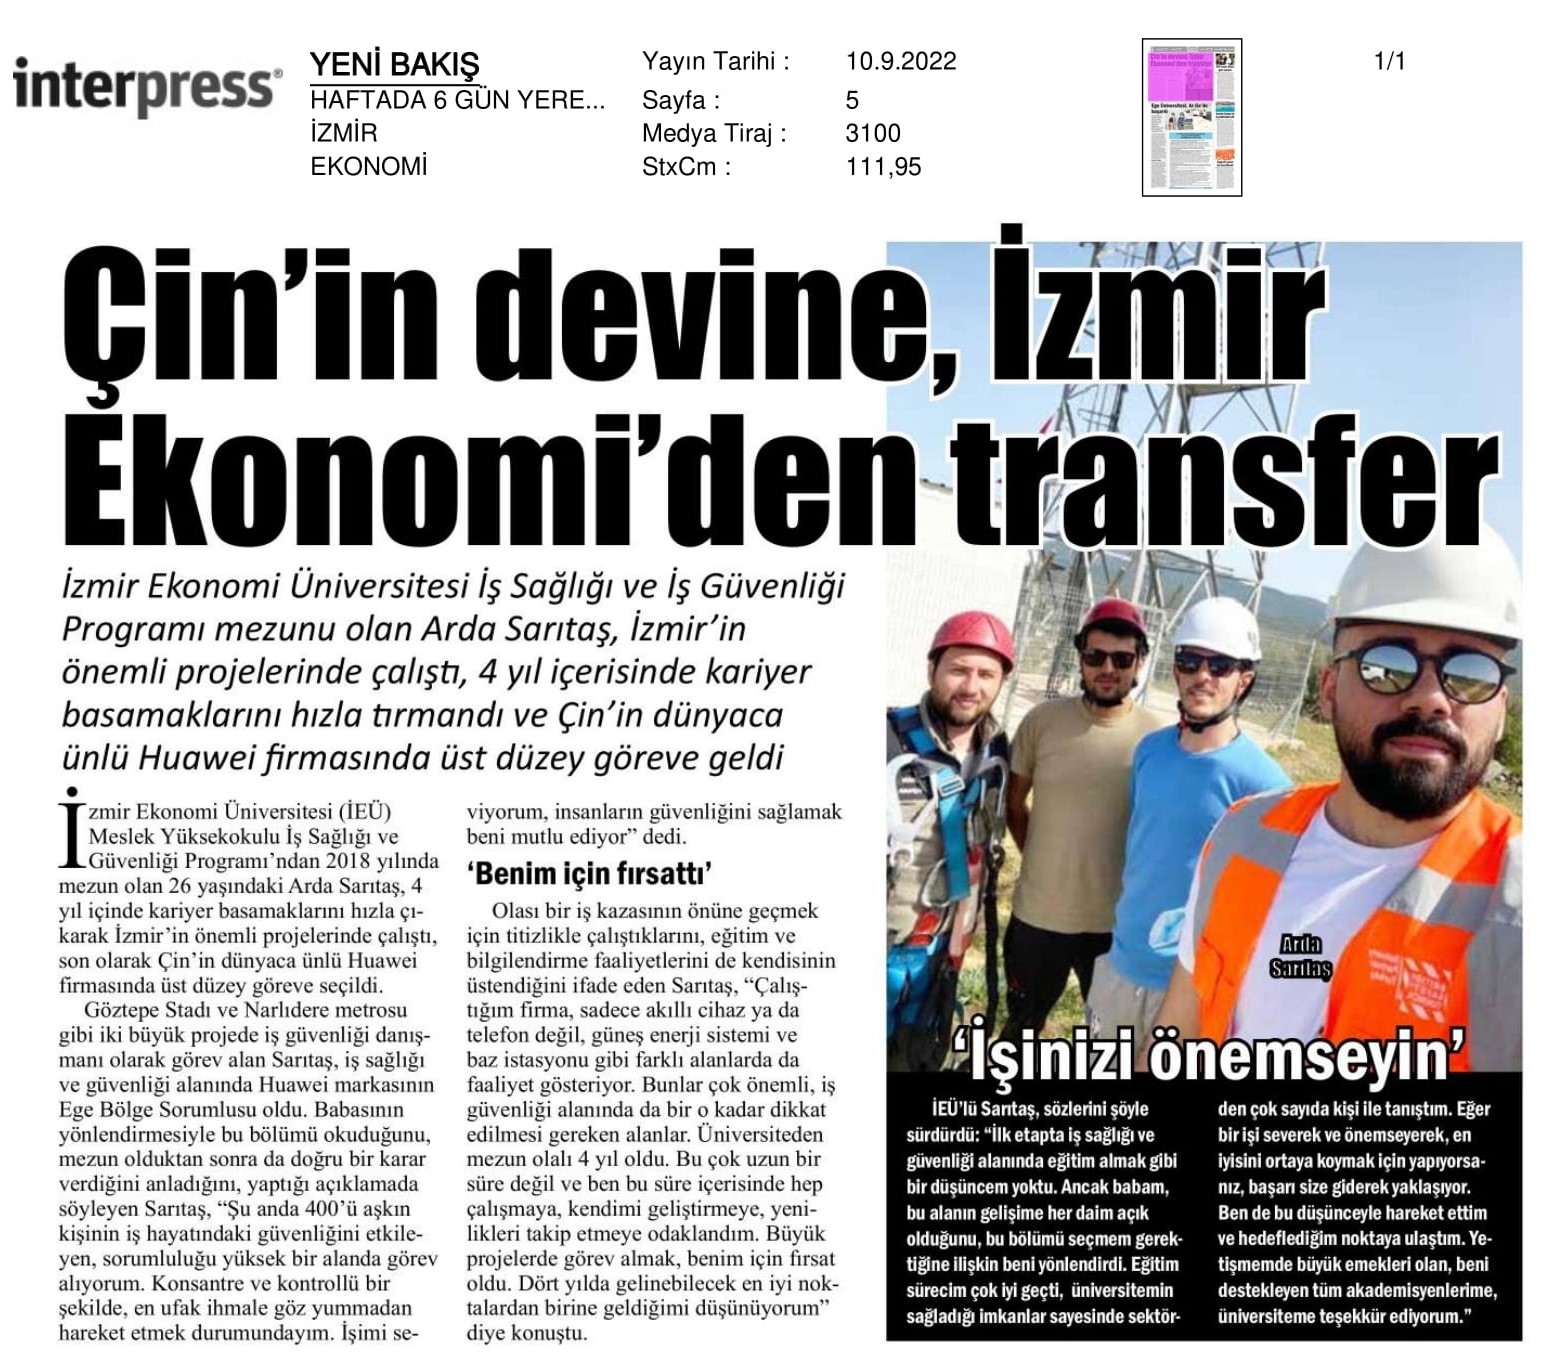 İzmir Ekonomi’den 'Çin devine’ transfer